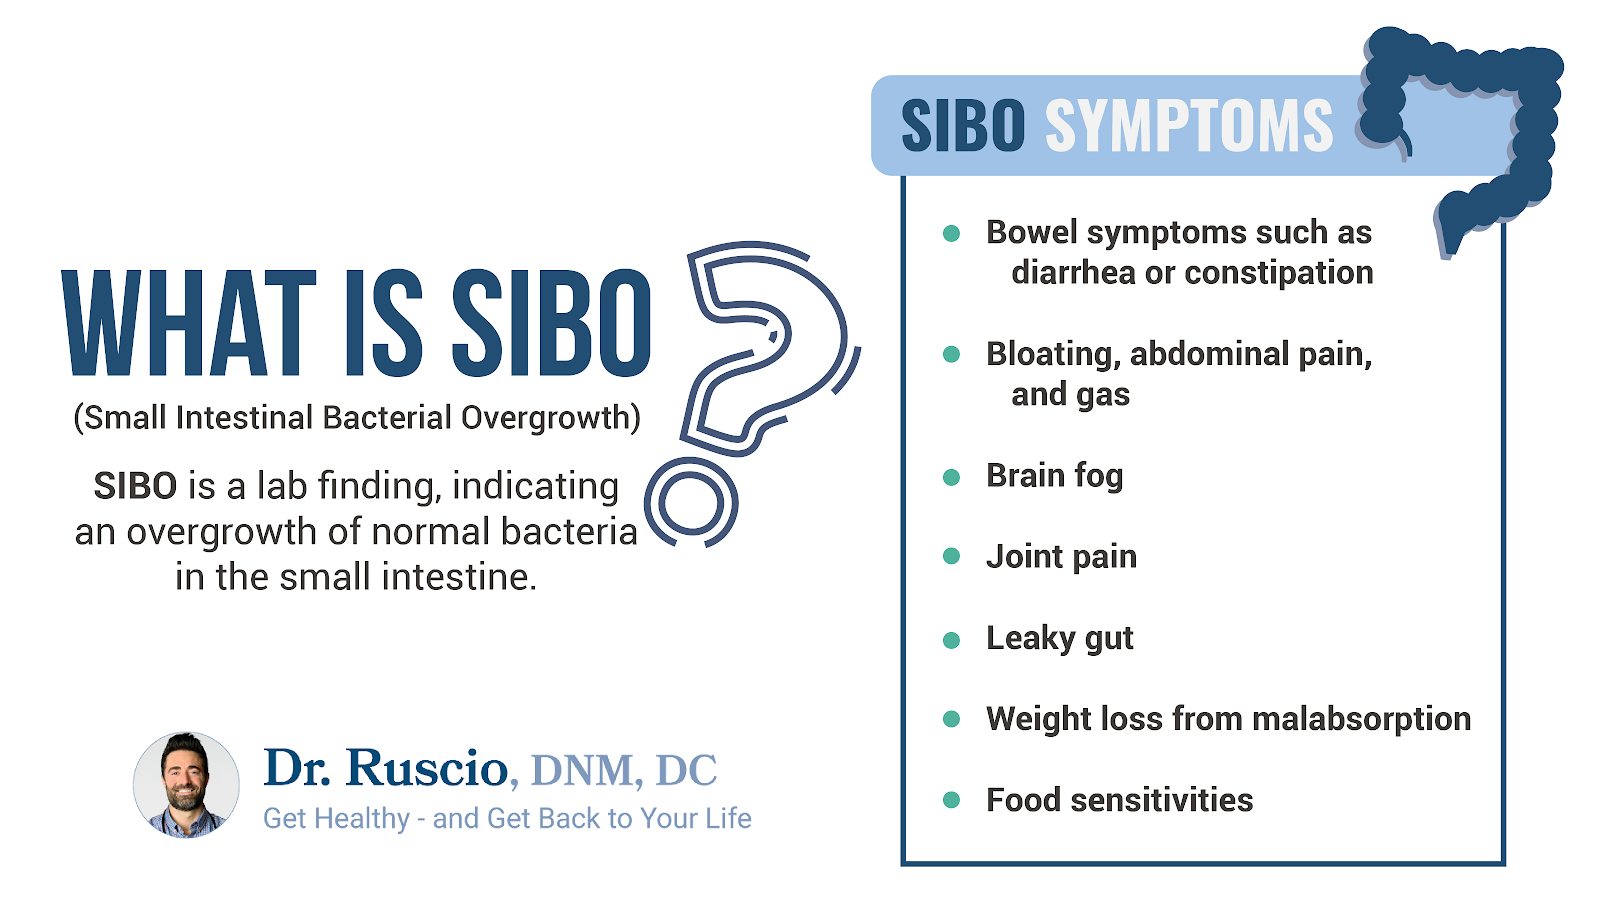 sibo fatigue: SIBO definition and list of SIBO symptoms